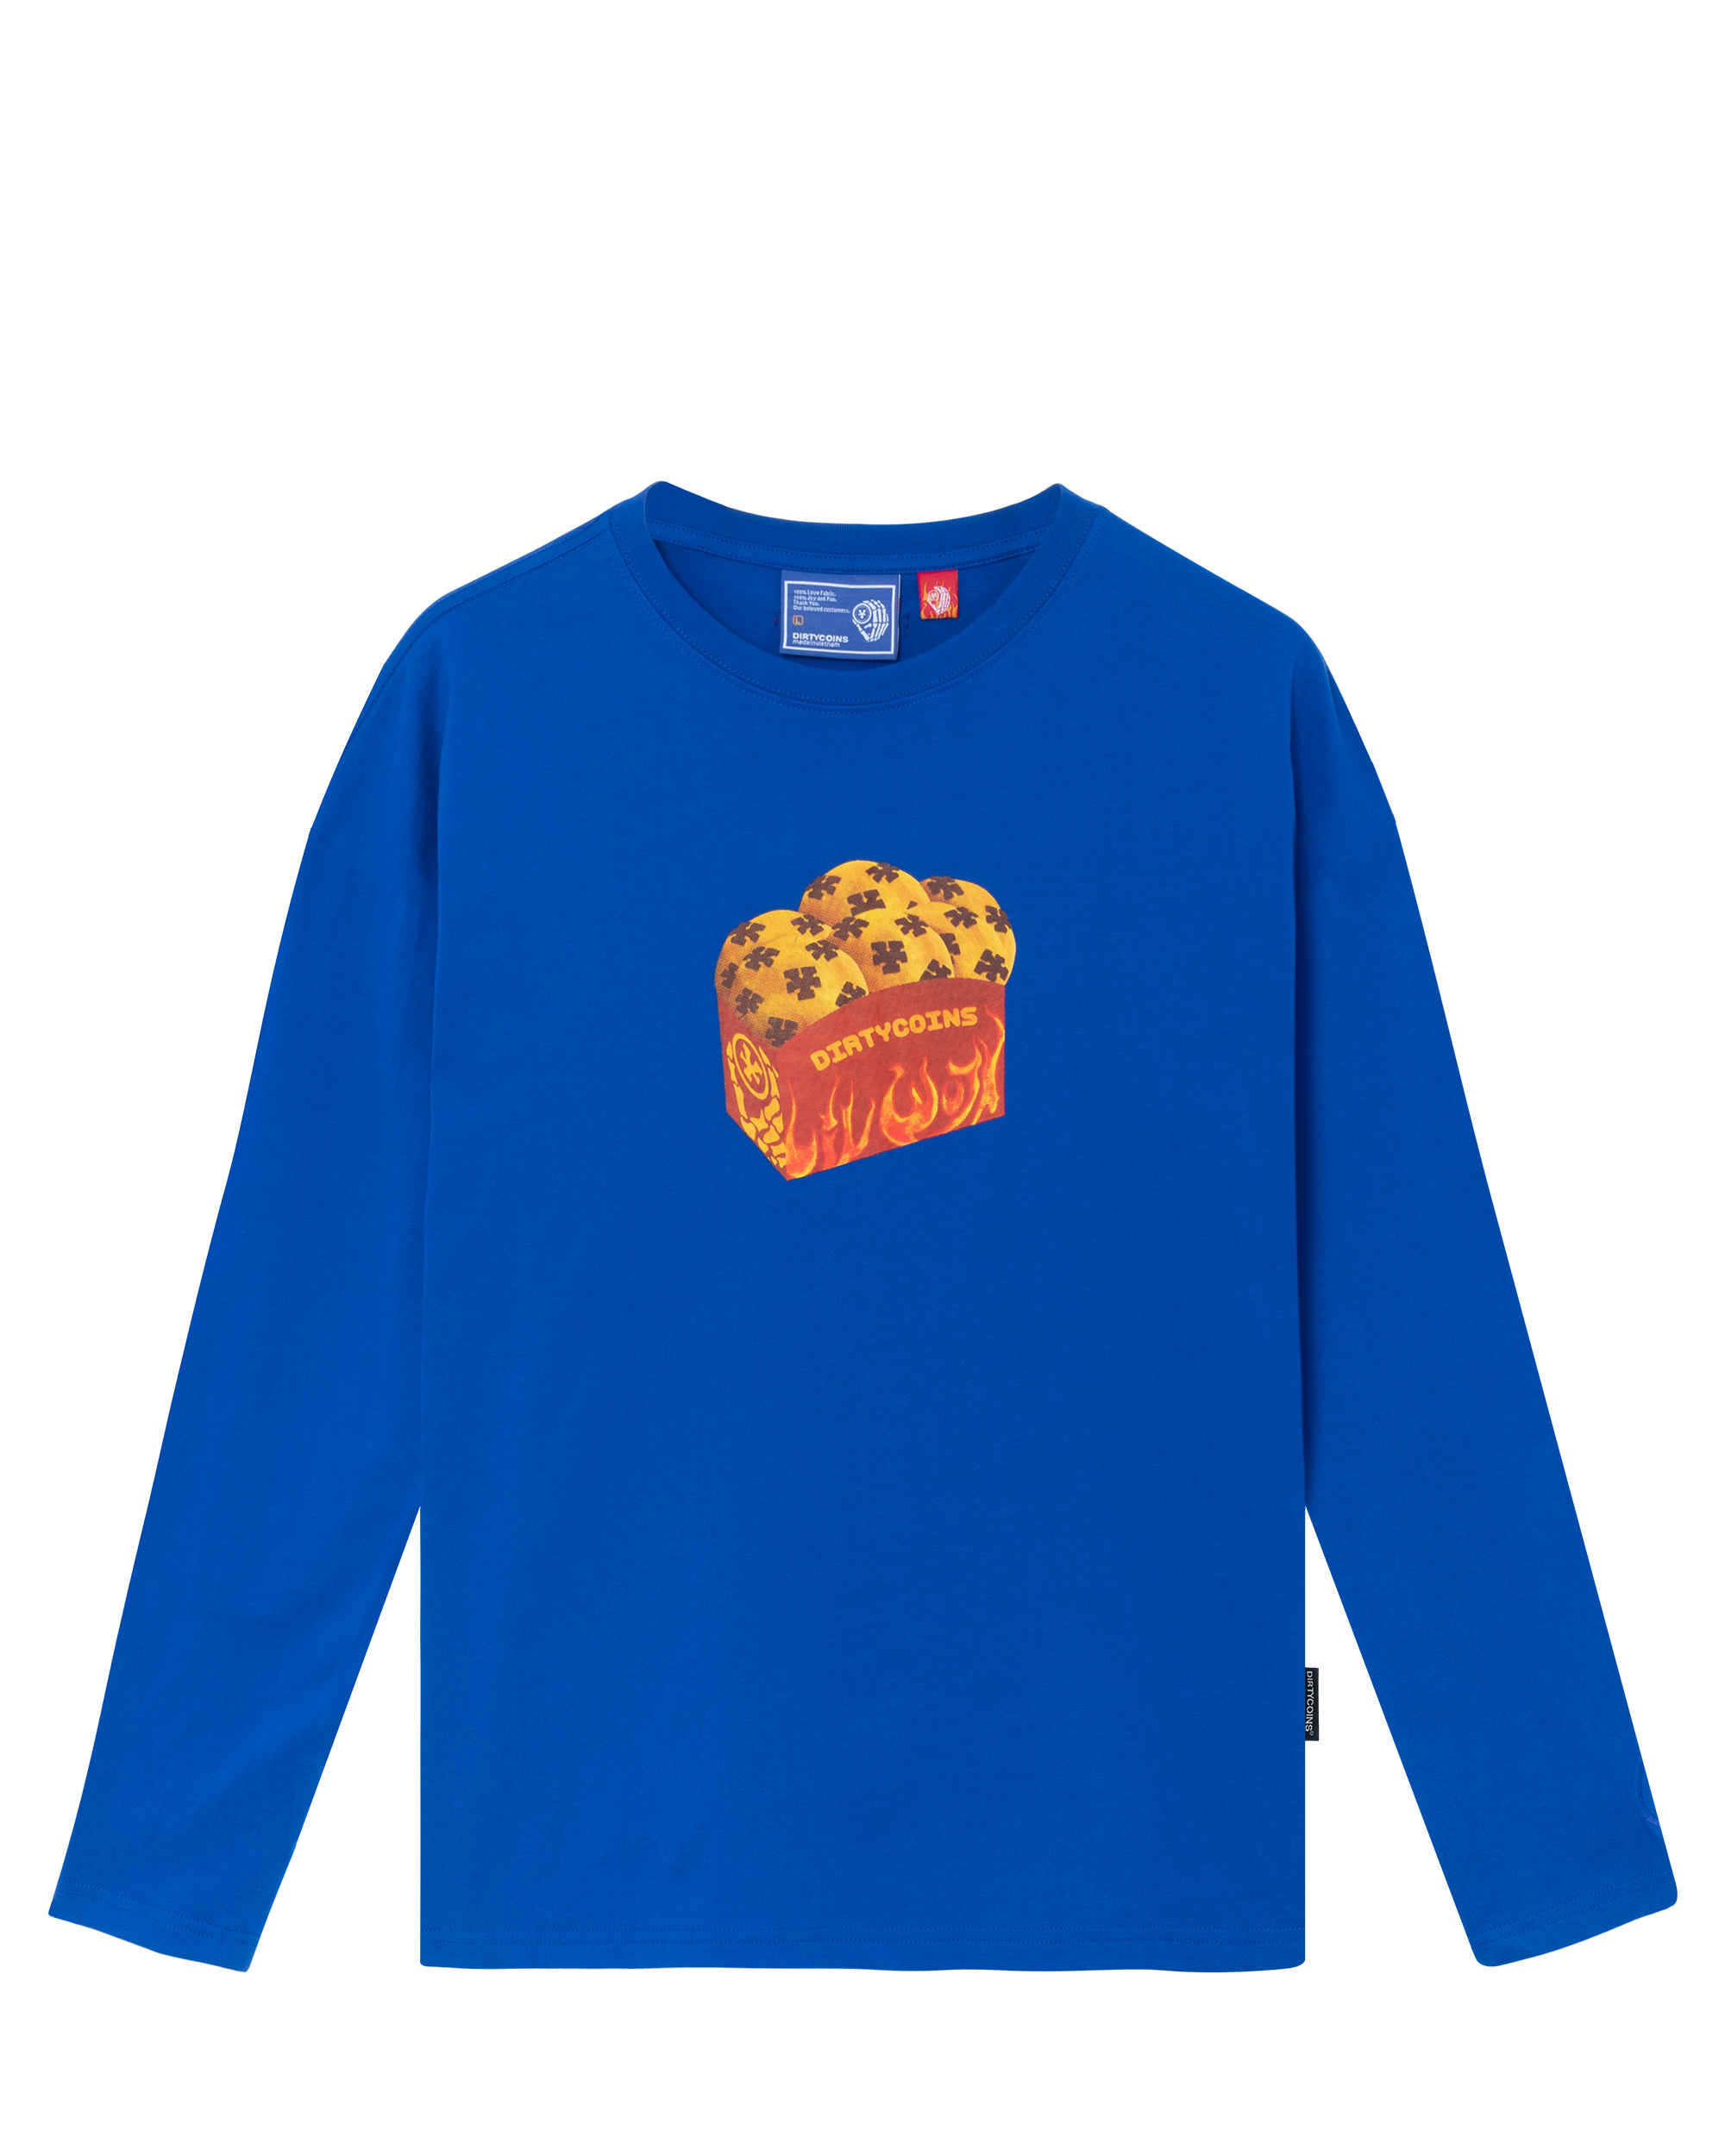 DirtyCoins x LilWuyn Shaker Cookie L/S T-Shirt - Blue